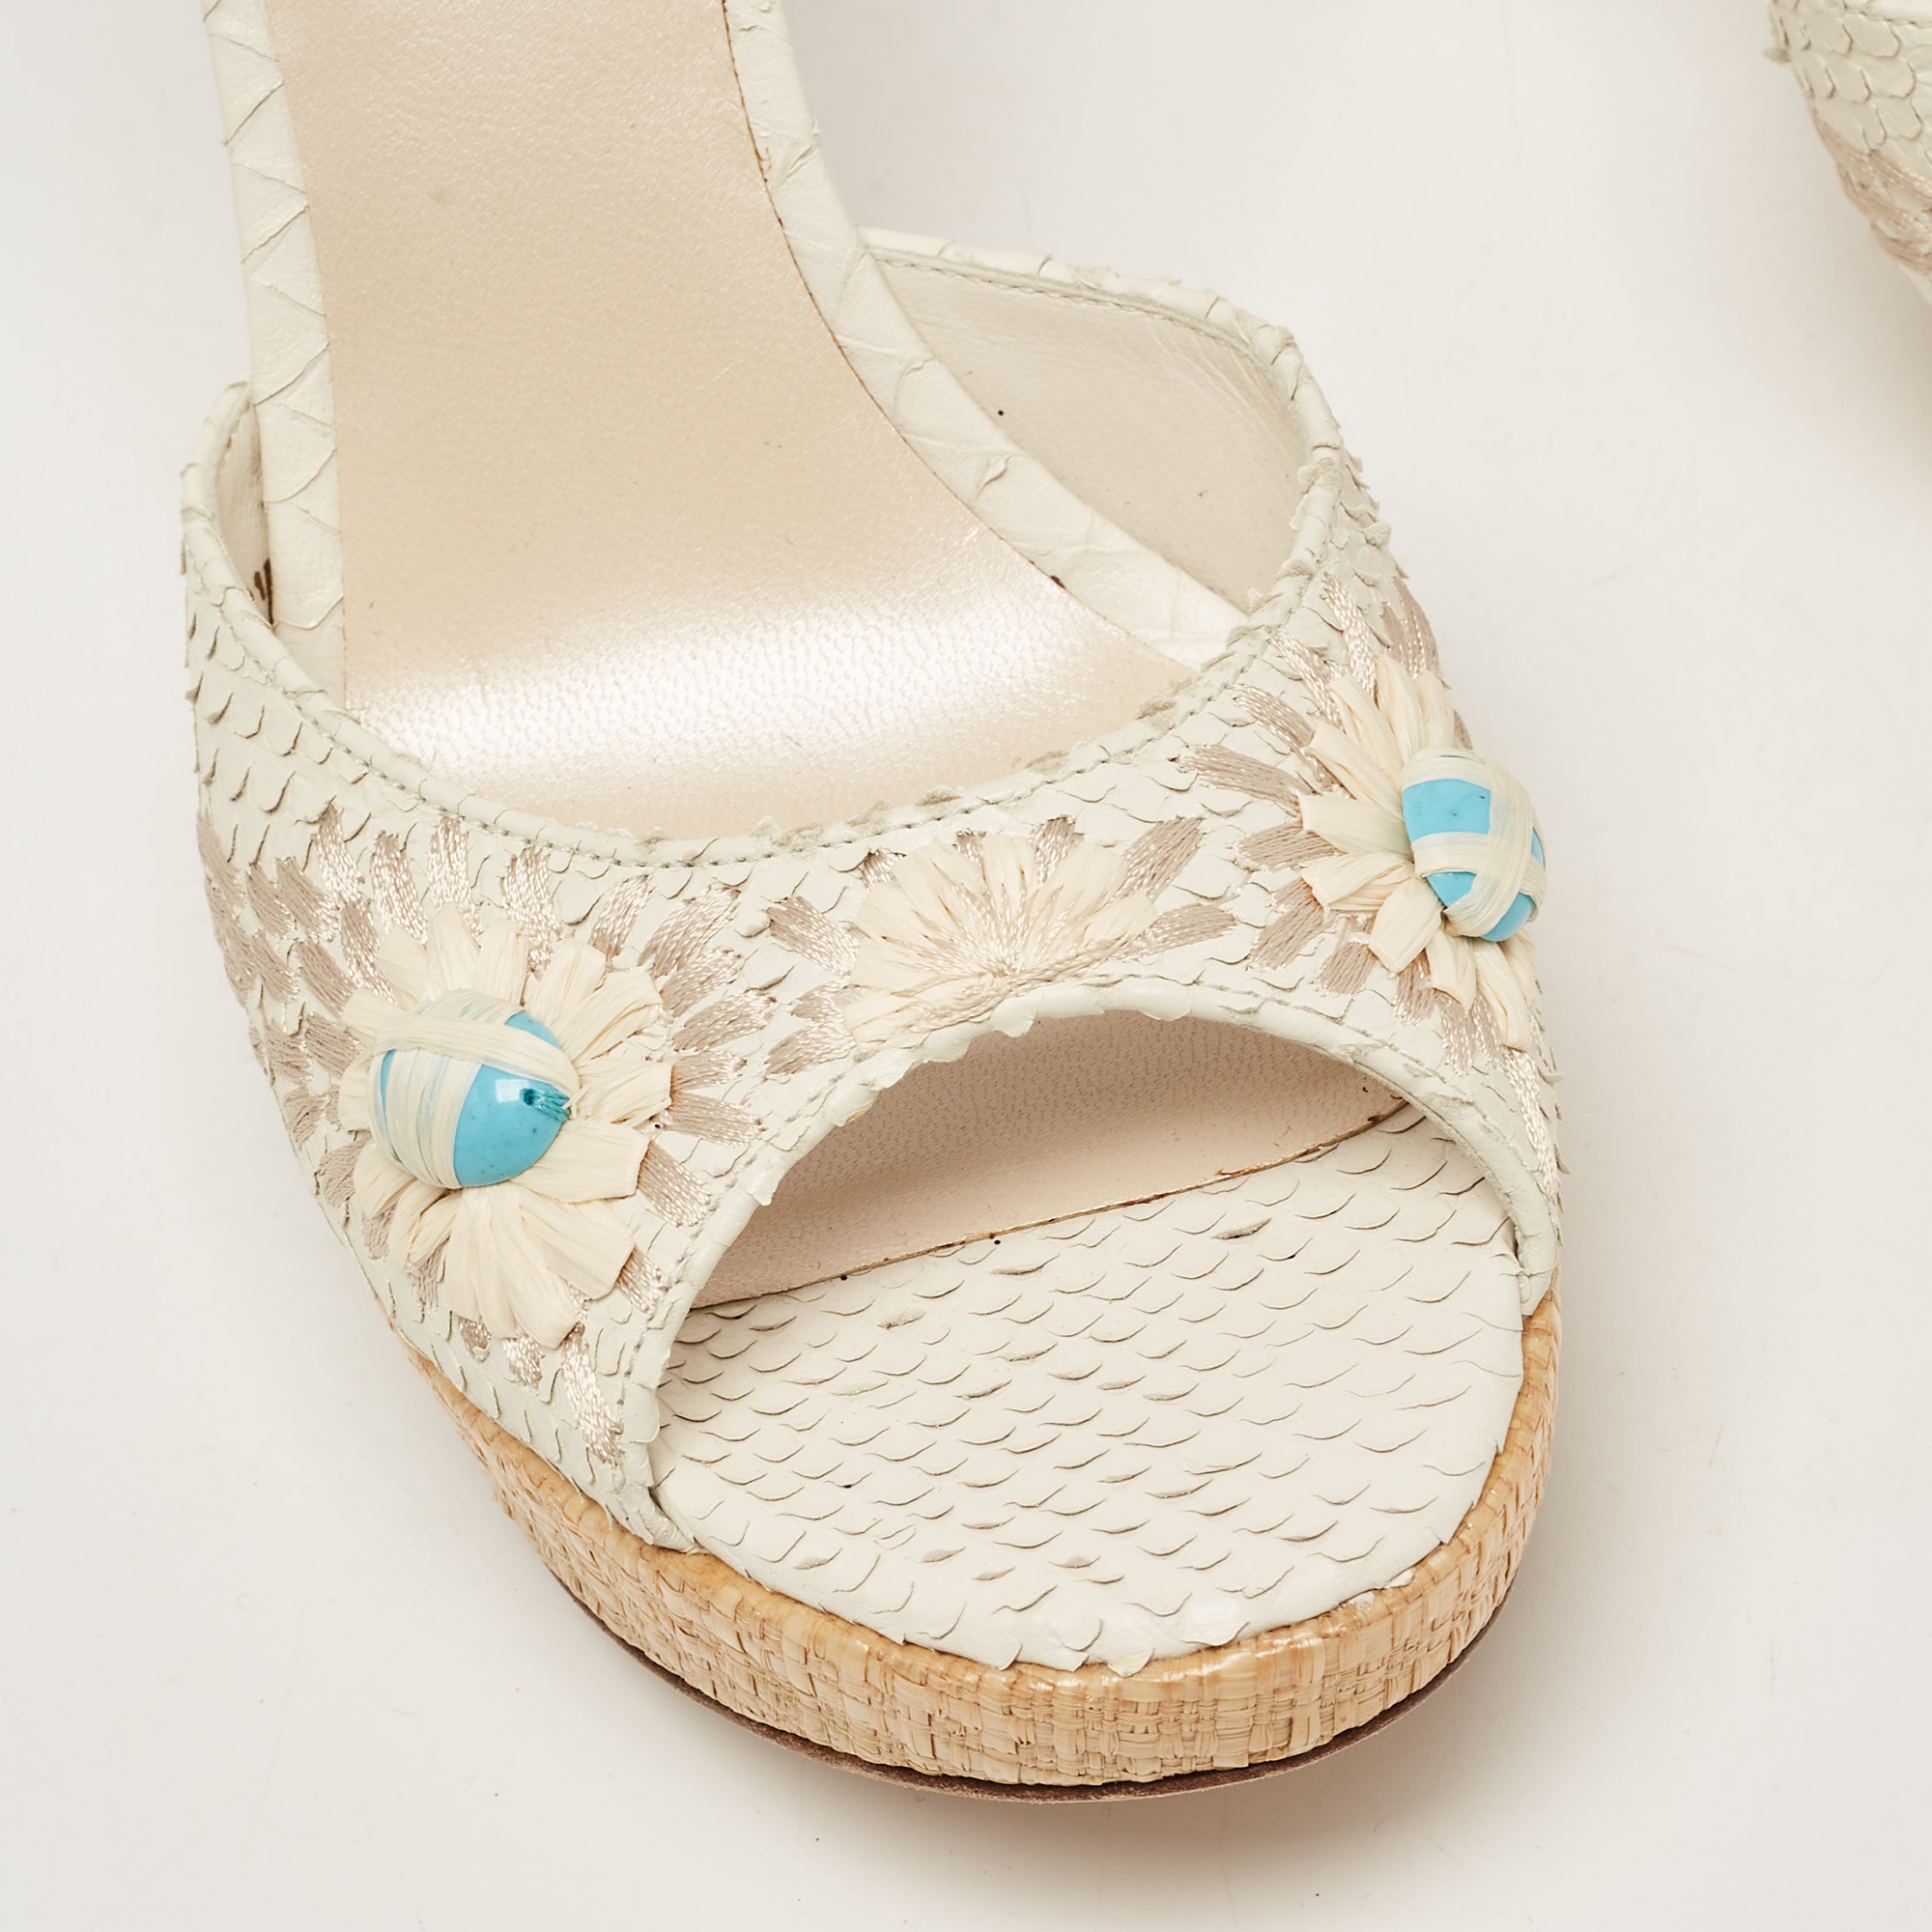 Dior White Python Floral Embroidered Raffia Platform Ankle Strap Sandals Size 38.5